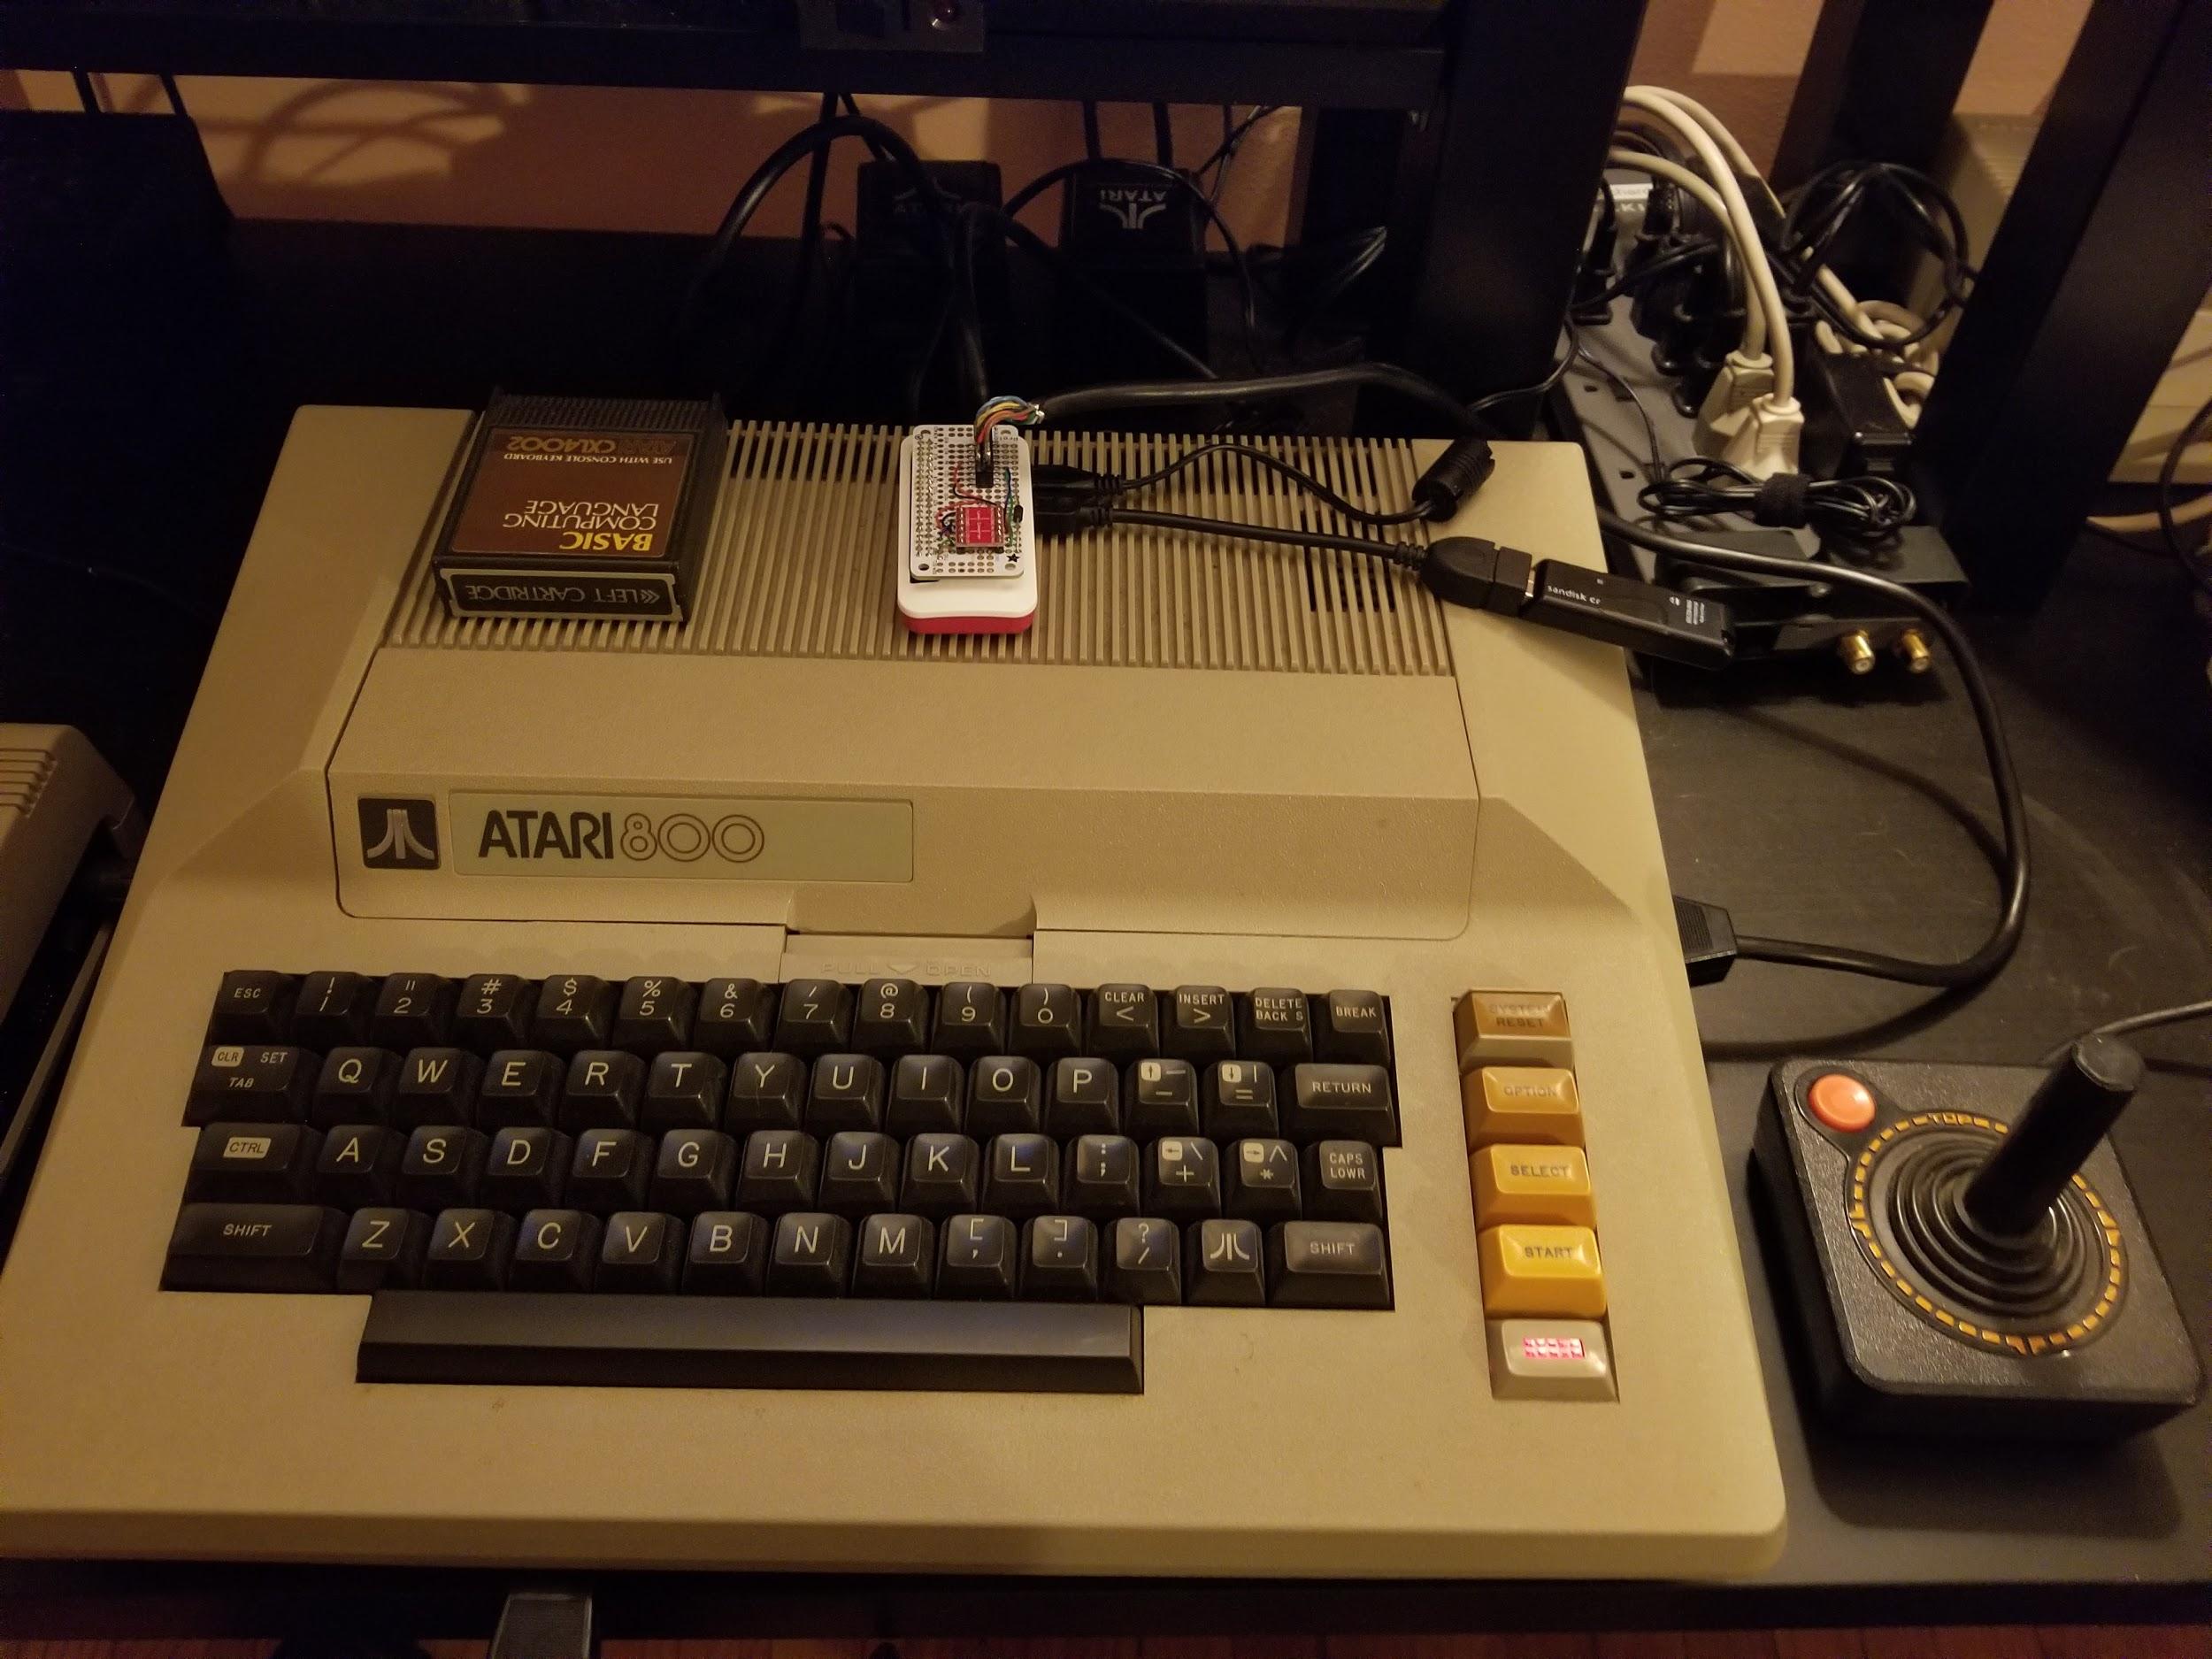 The whole Atari 800 and SIO2Pi setup sitting on my table